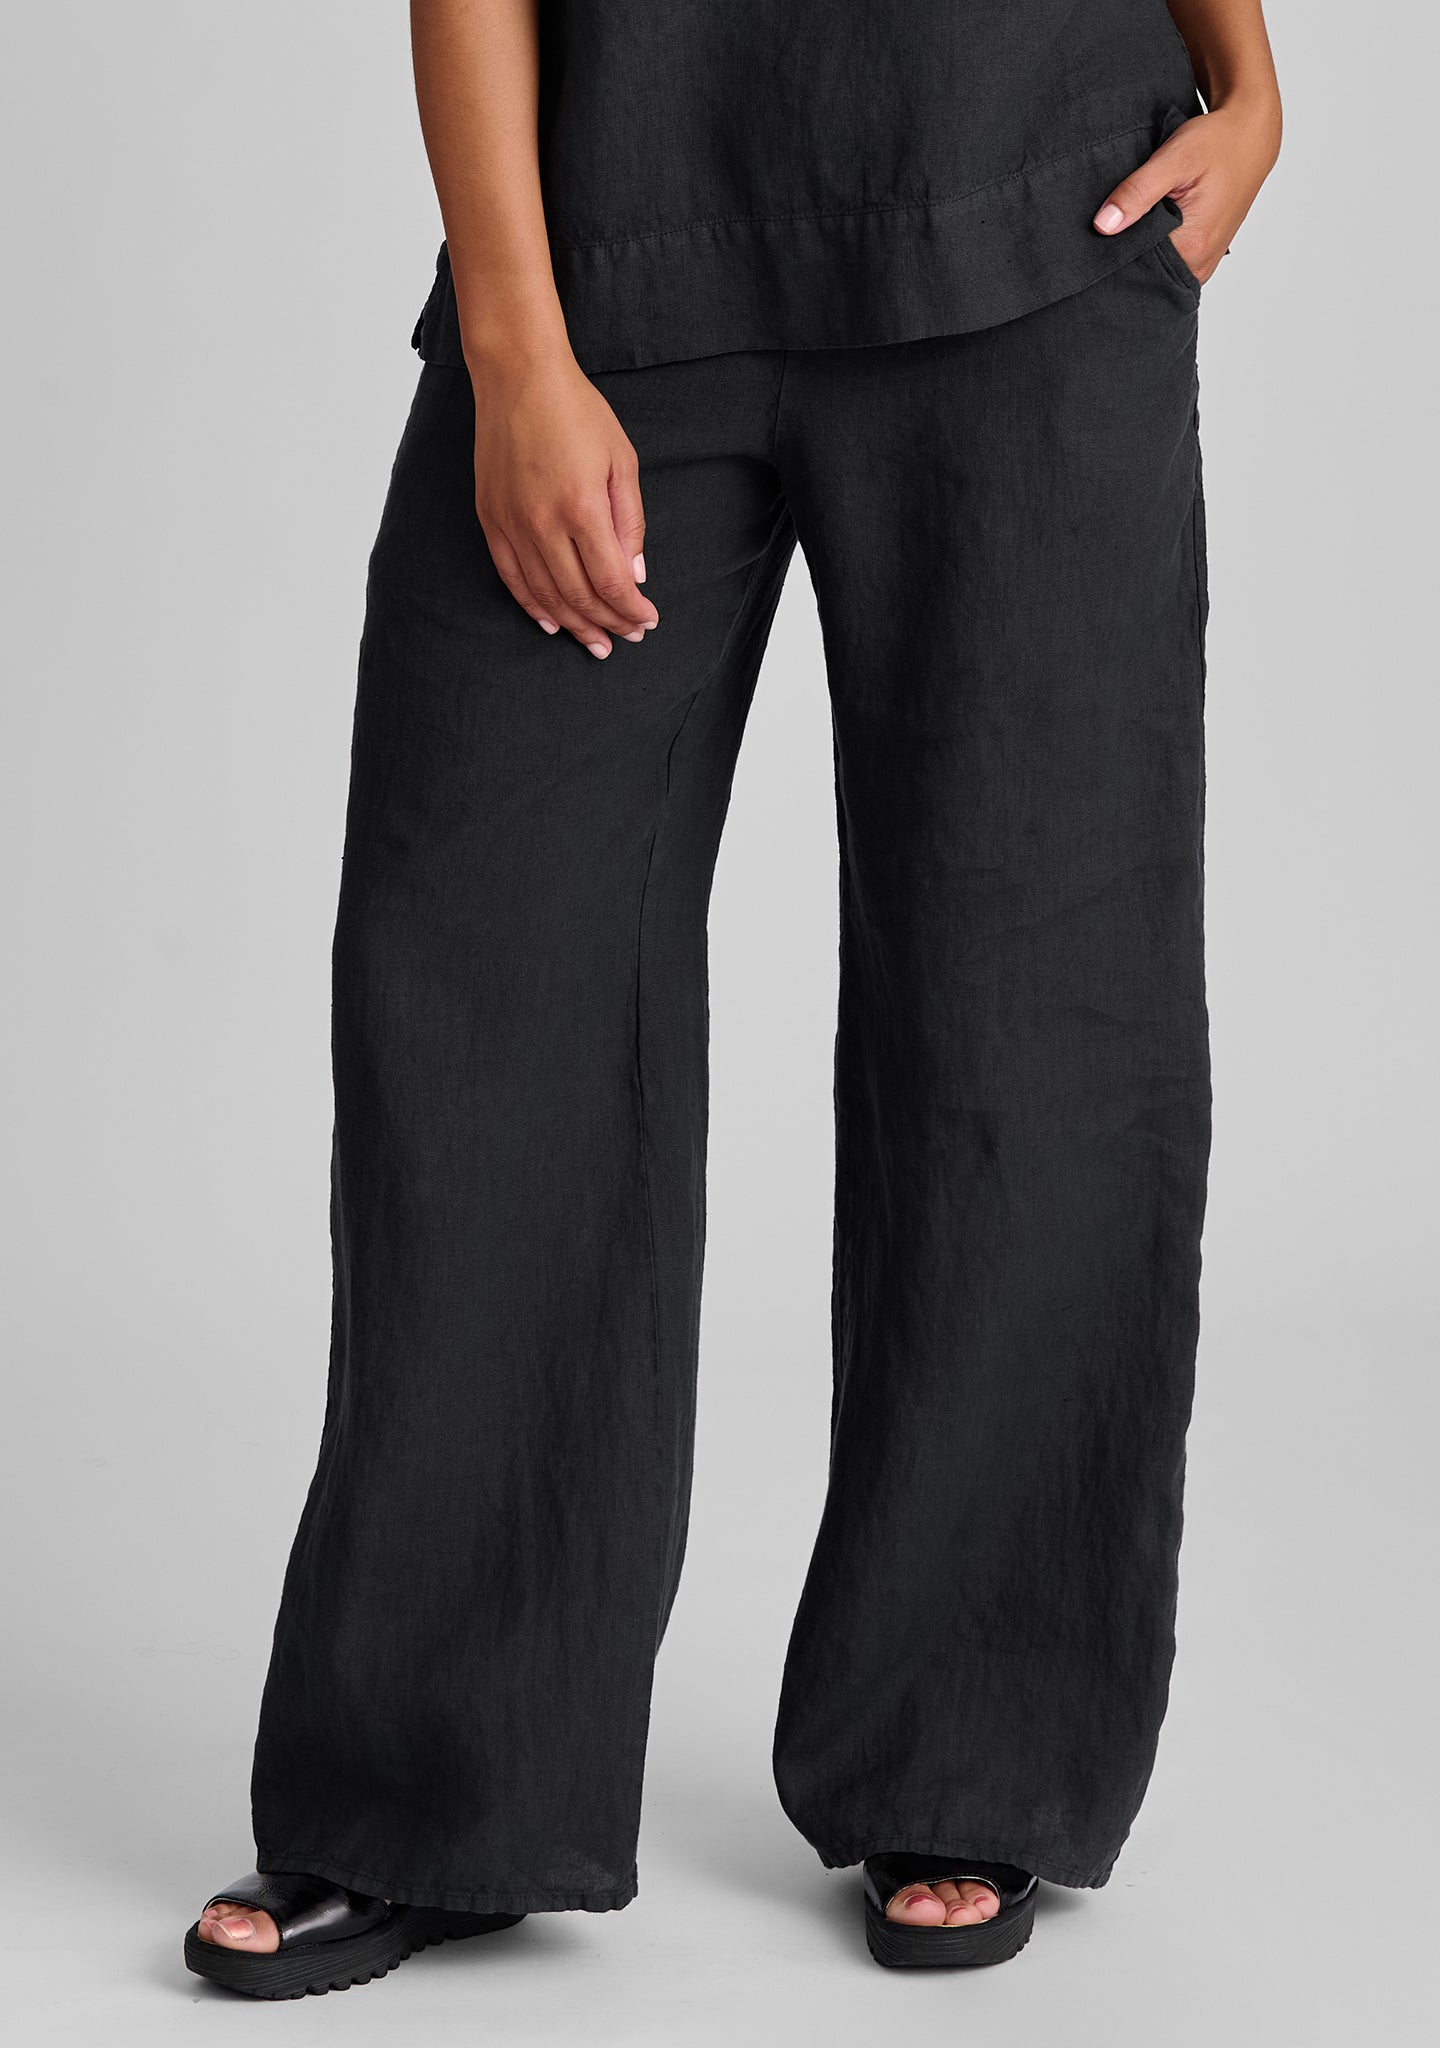 flat iron pant linen drawstring pants black